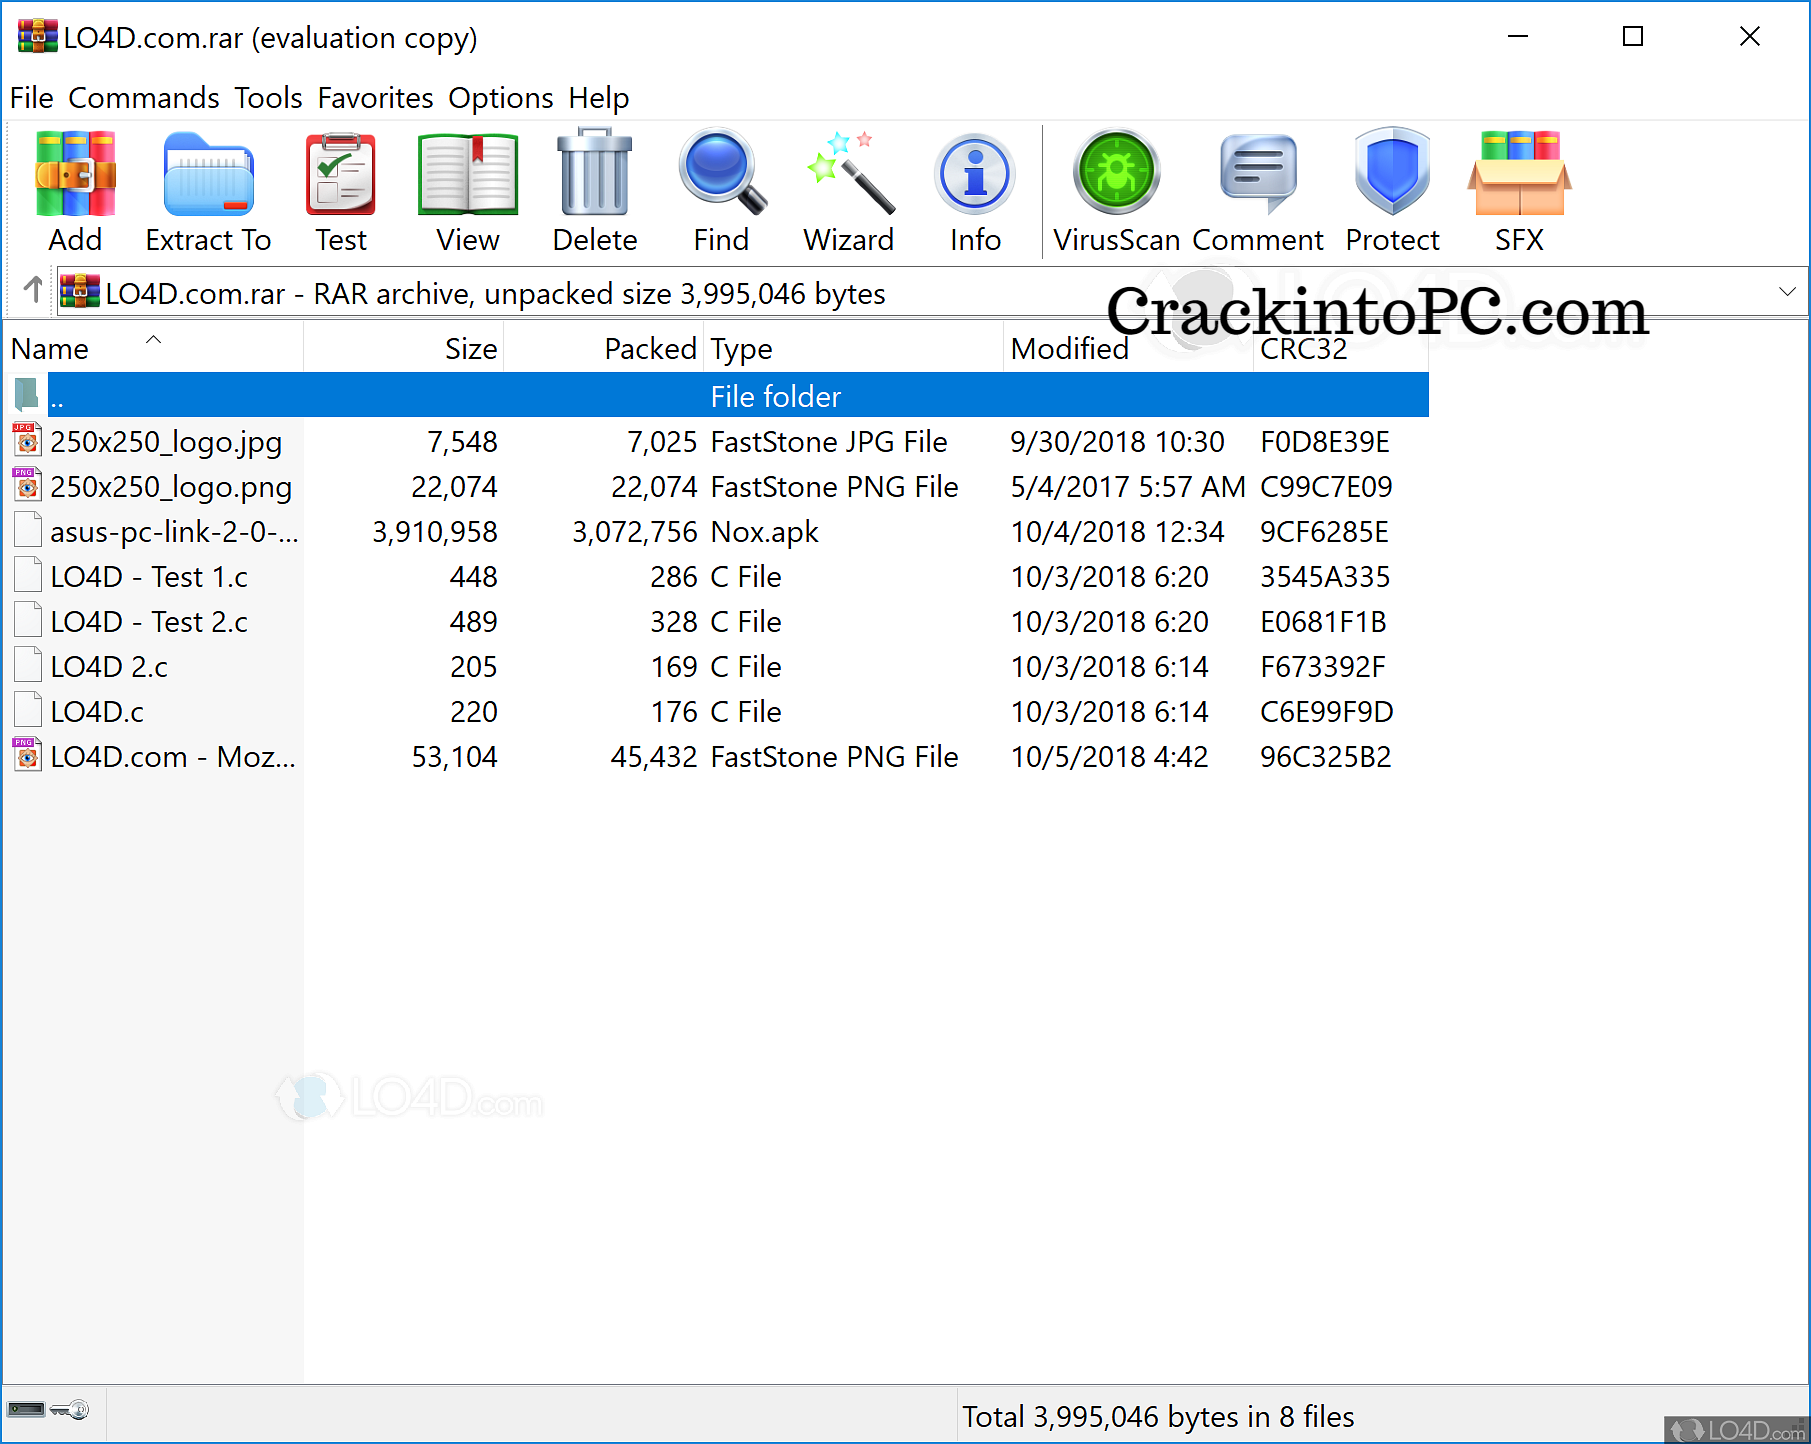 Winrar registration key file free download free download 7 zip 64 bit